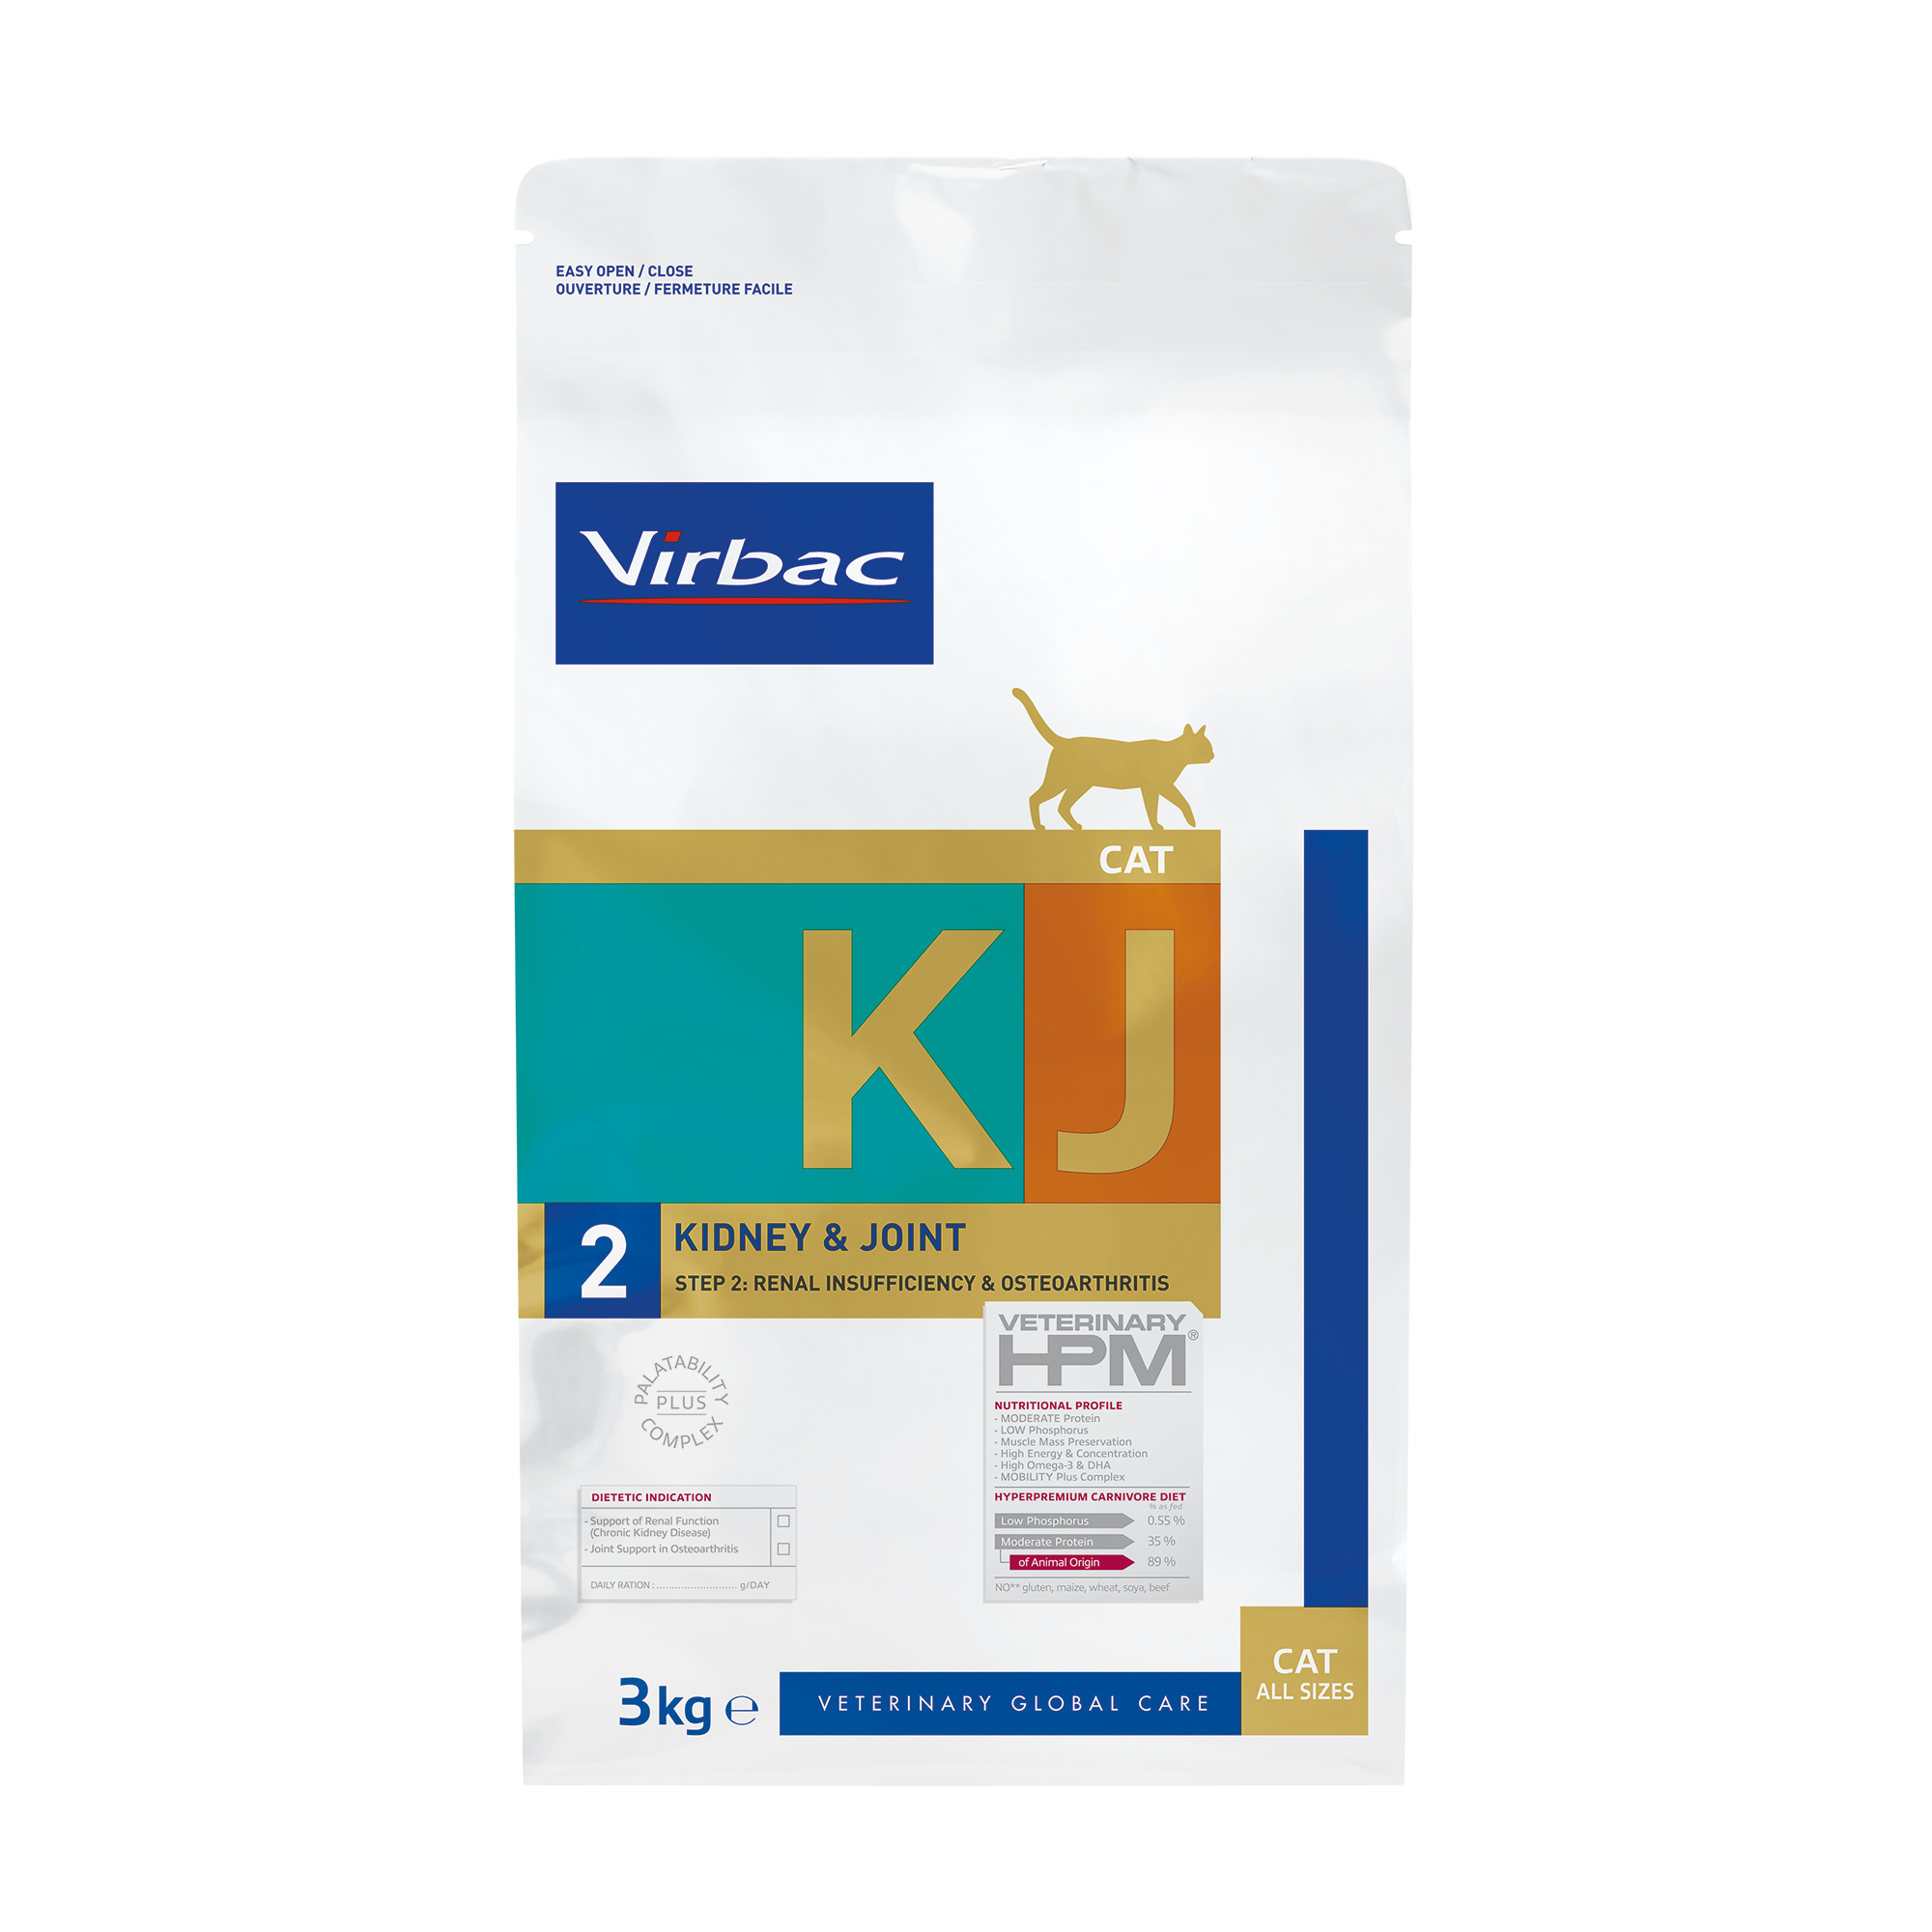 Virbac Veterinary HPM KJ2 - Kidney & Joint Support para gatos